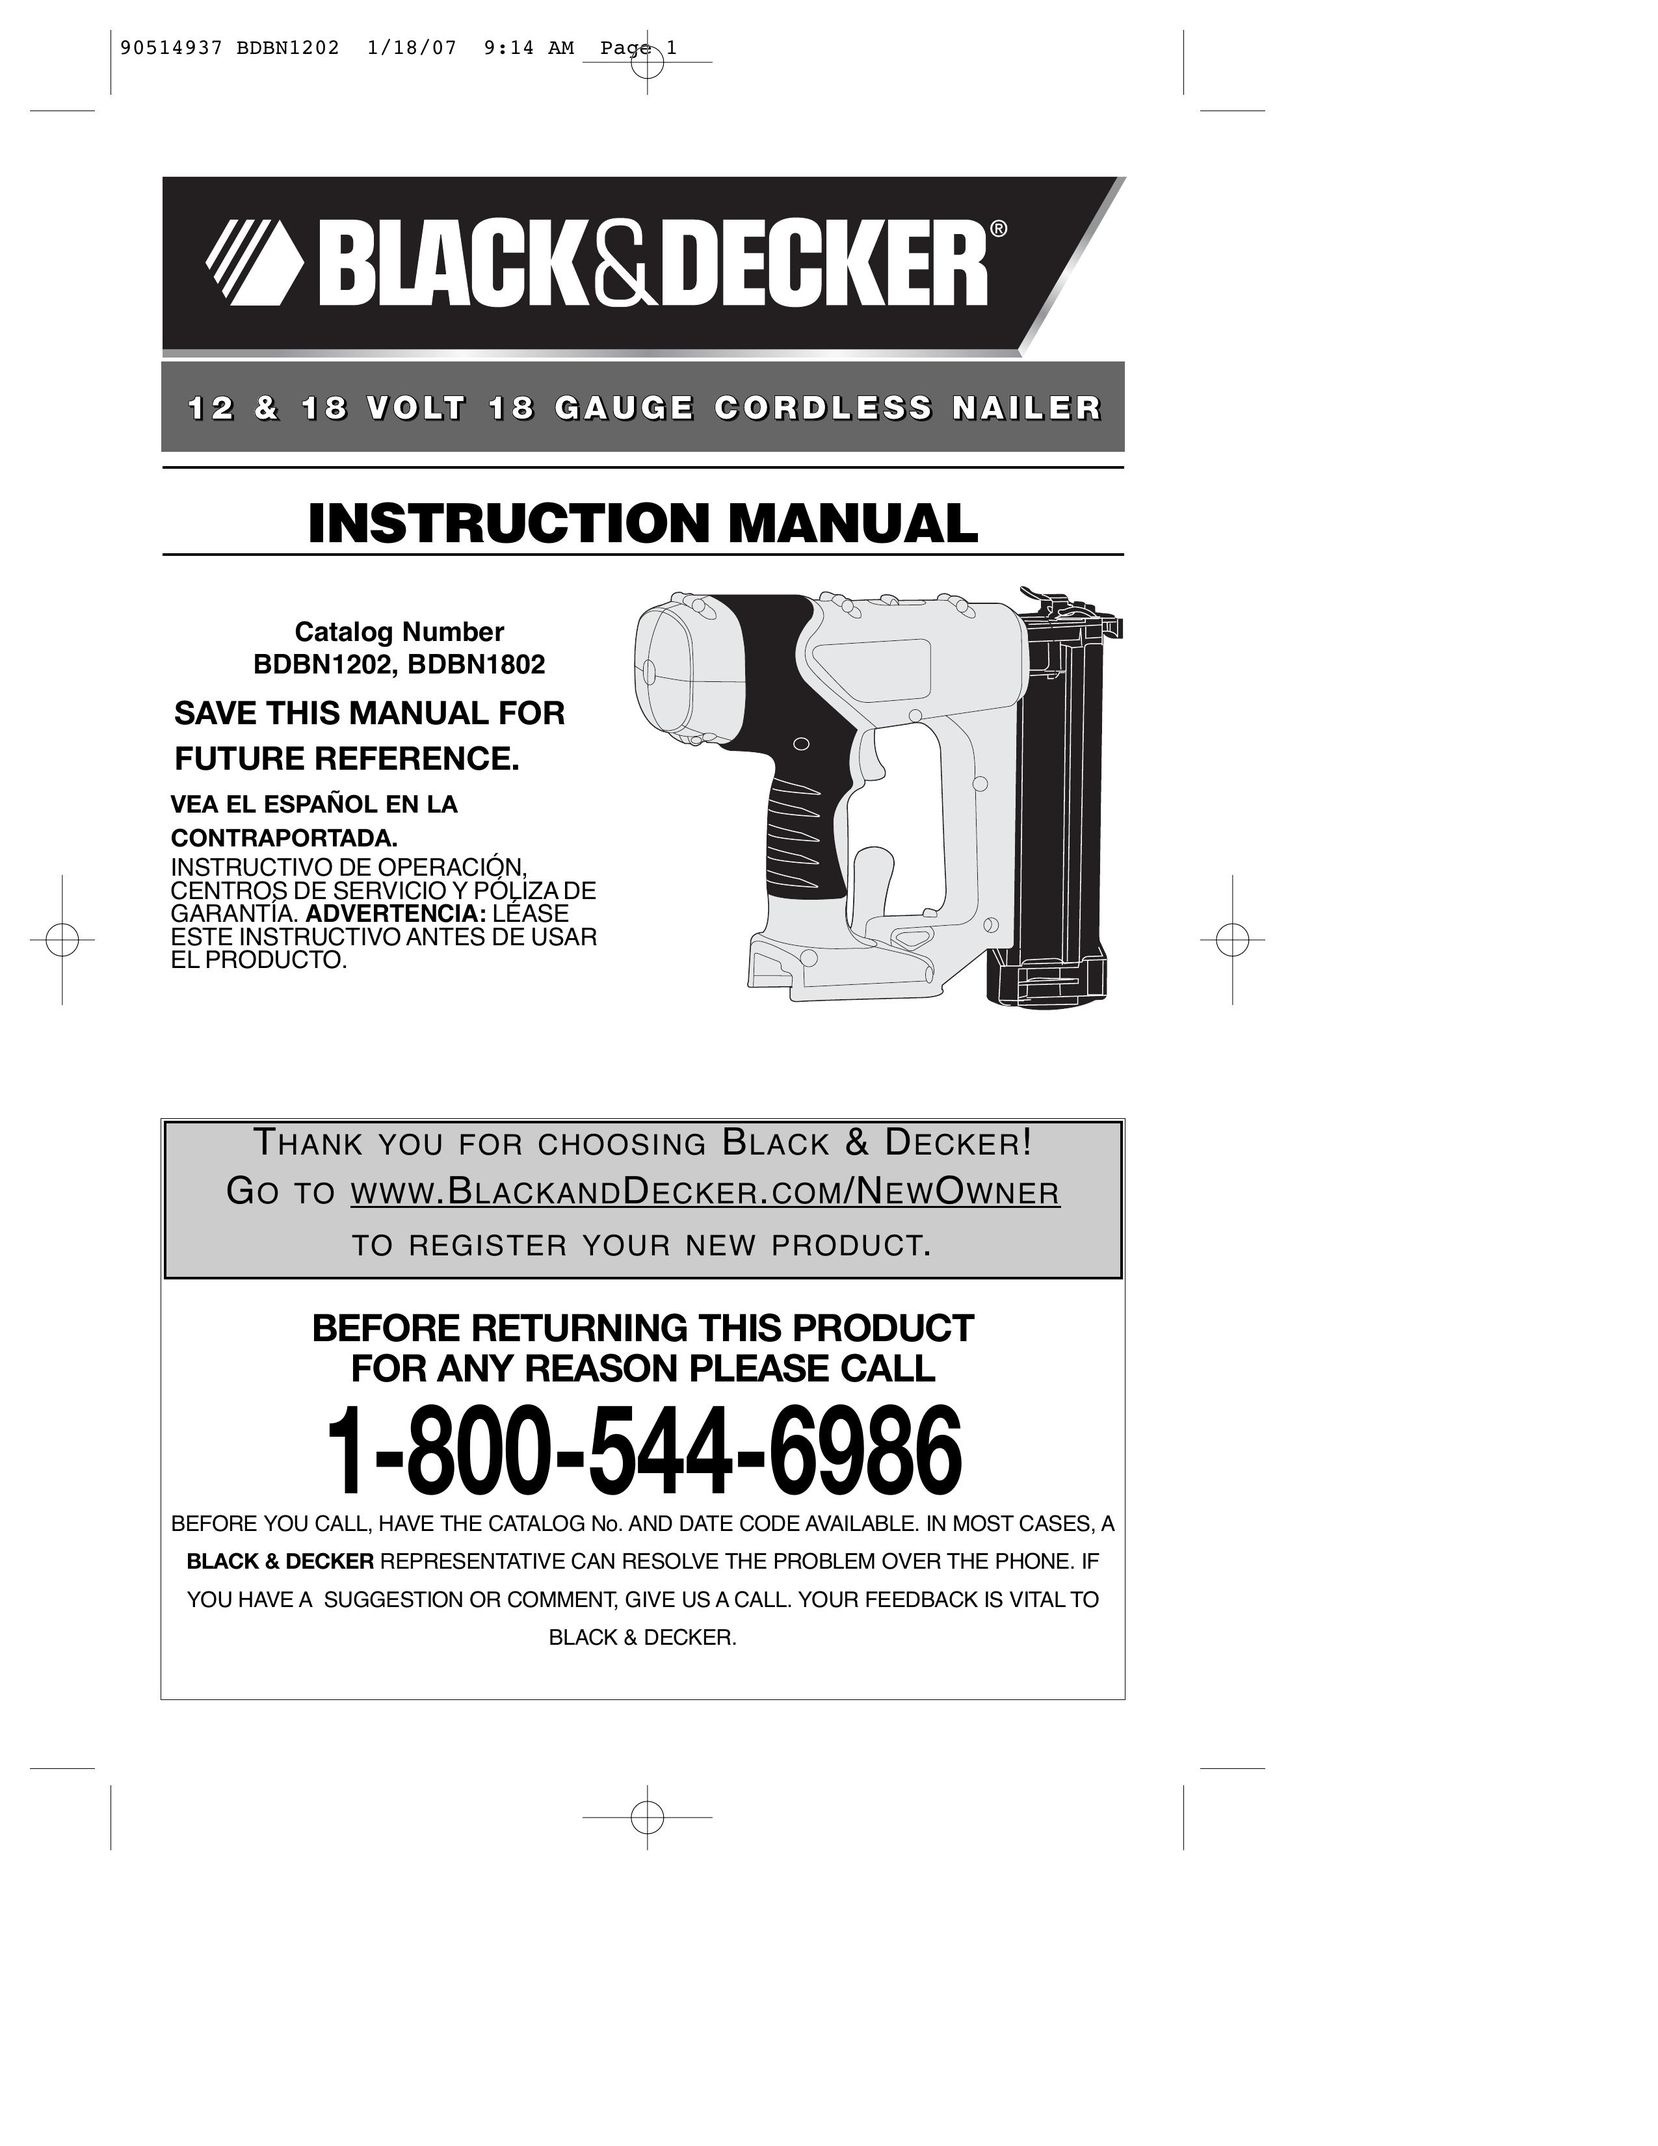 Black & Decker BDBN1202 Nail Gun User Manual